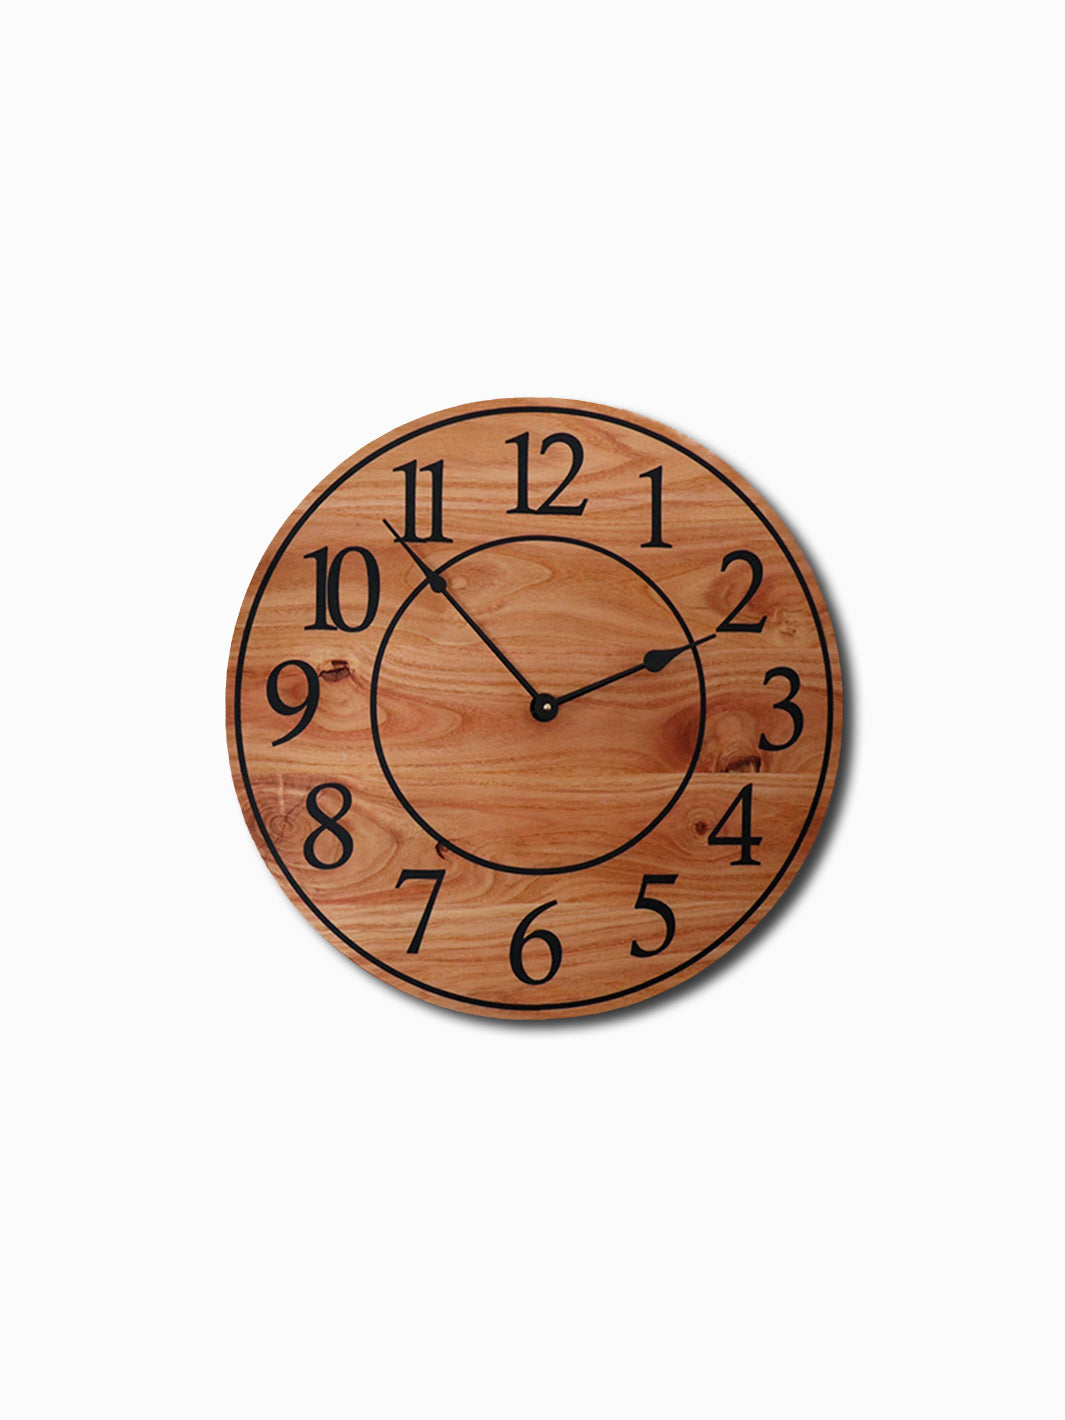 Locust Hardwood Large Wall Clock with Regular Numbers Earthly Comfort Clocks 1407